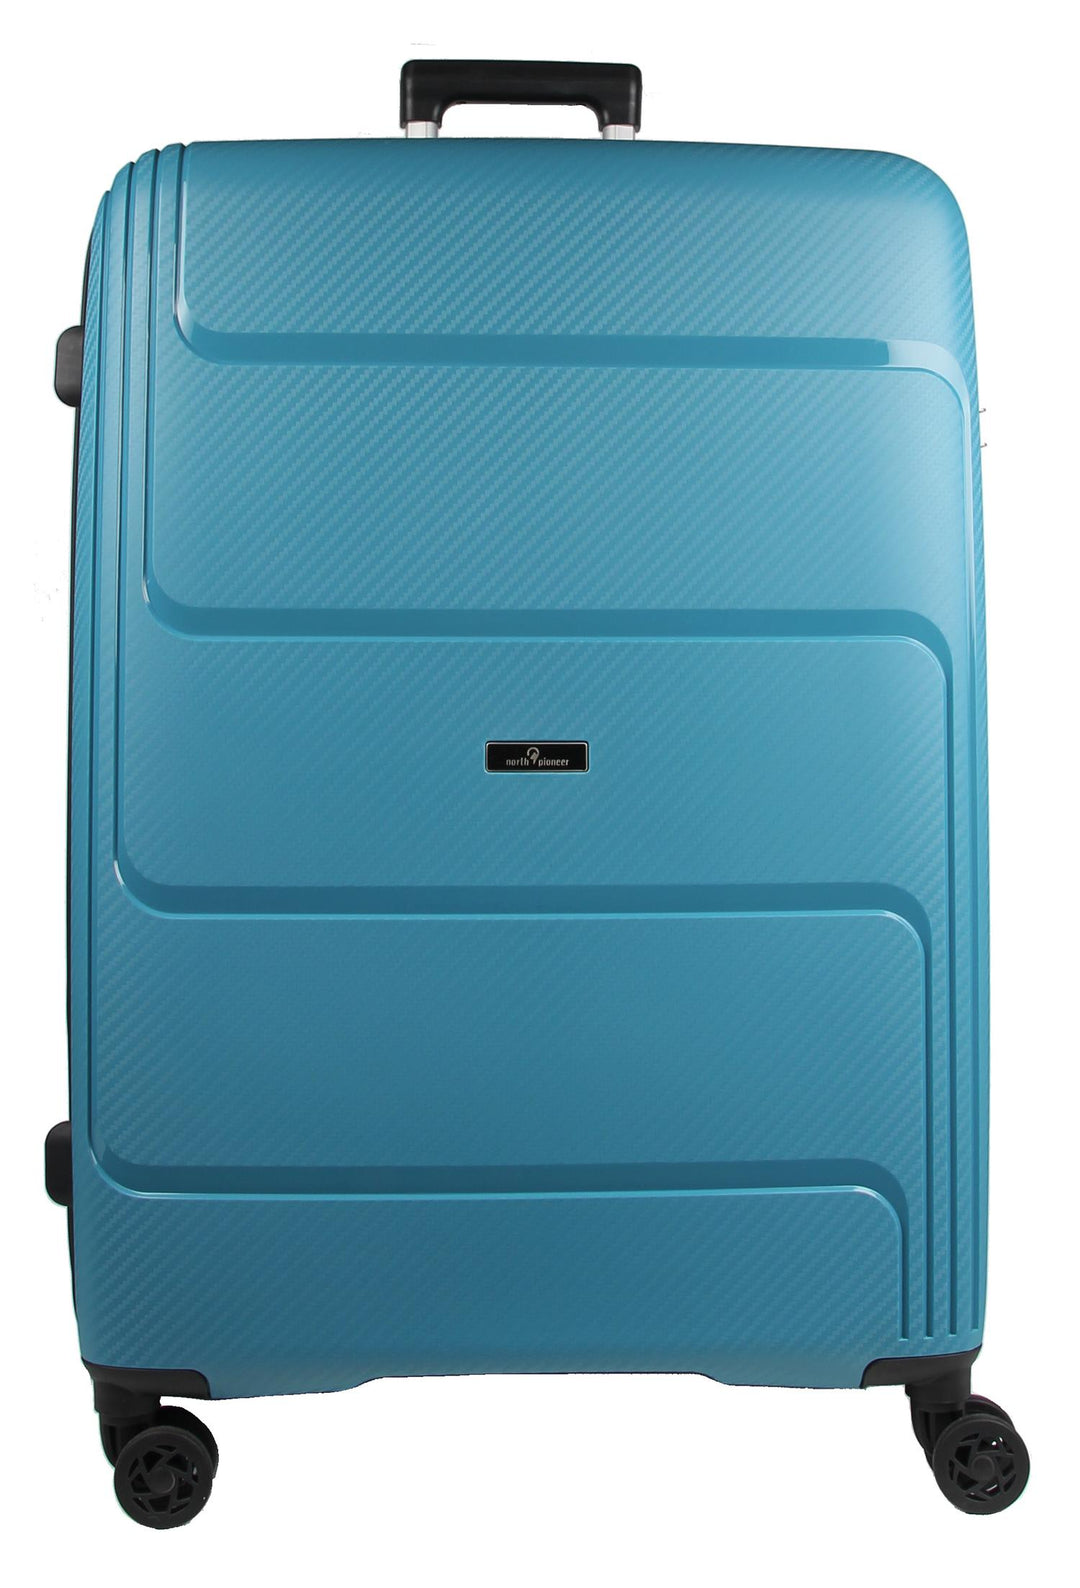 HELSINKI Suitcase